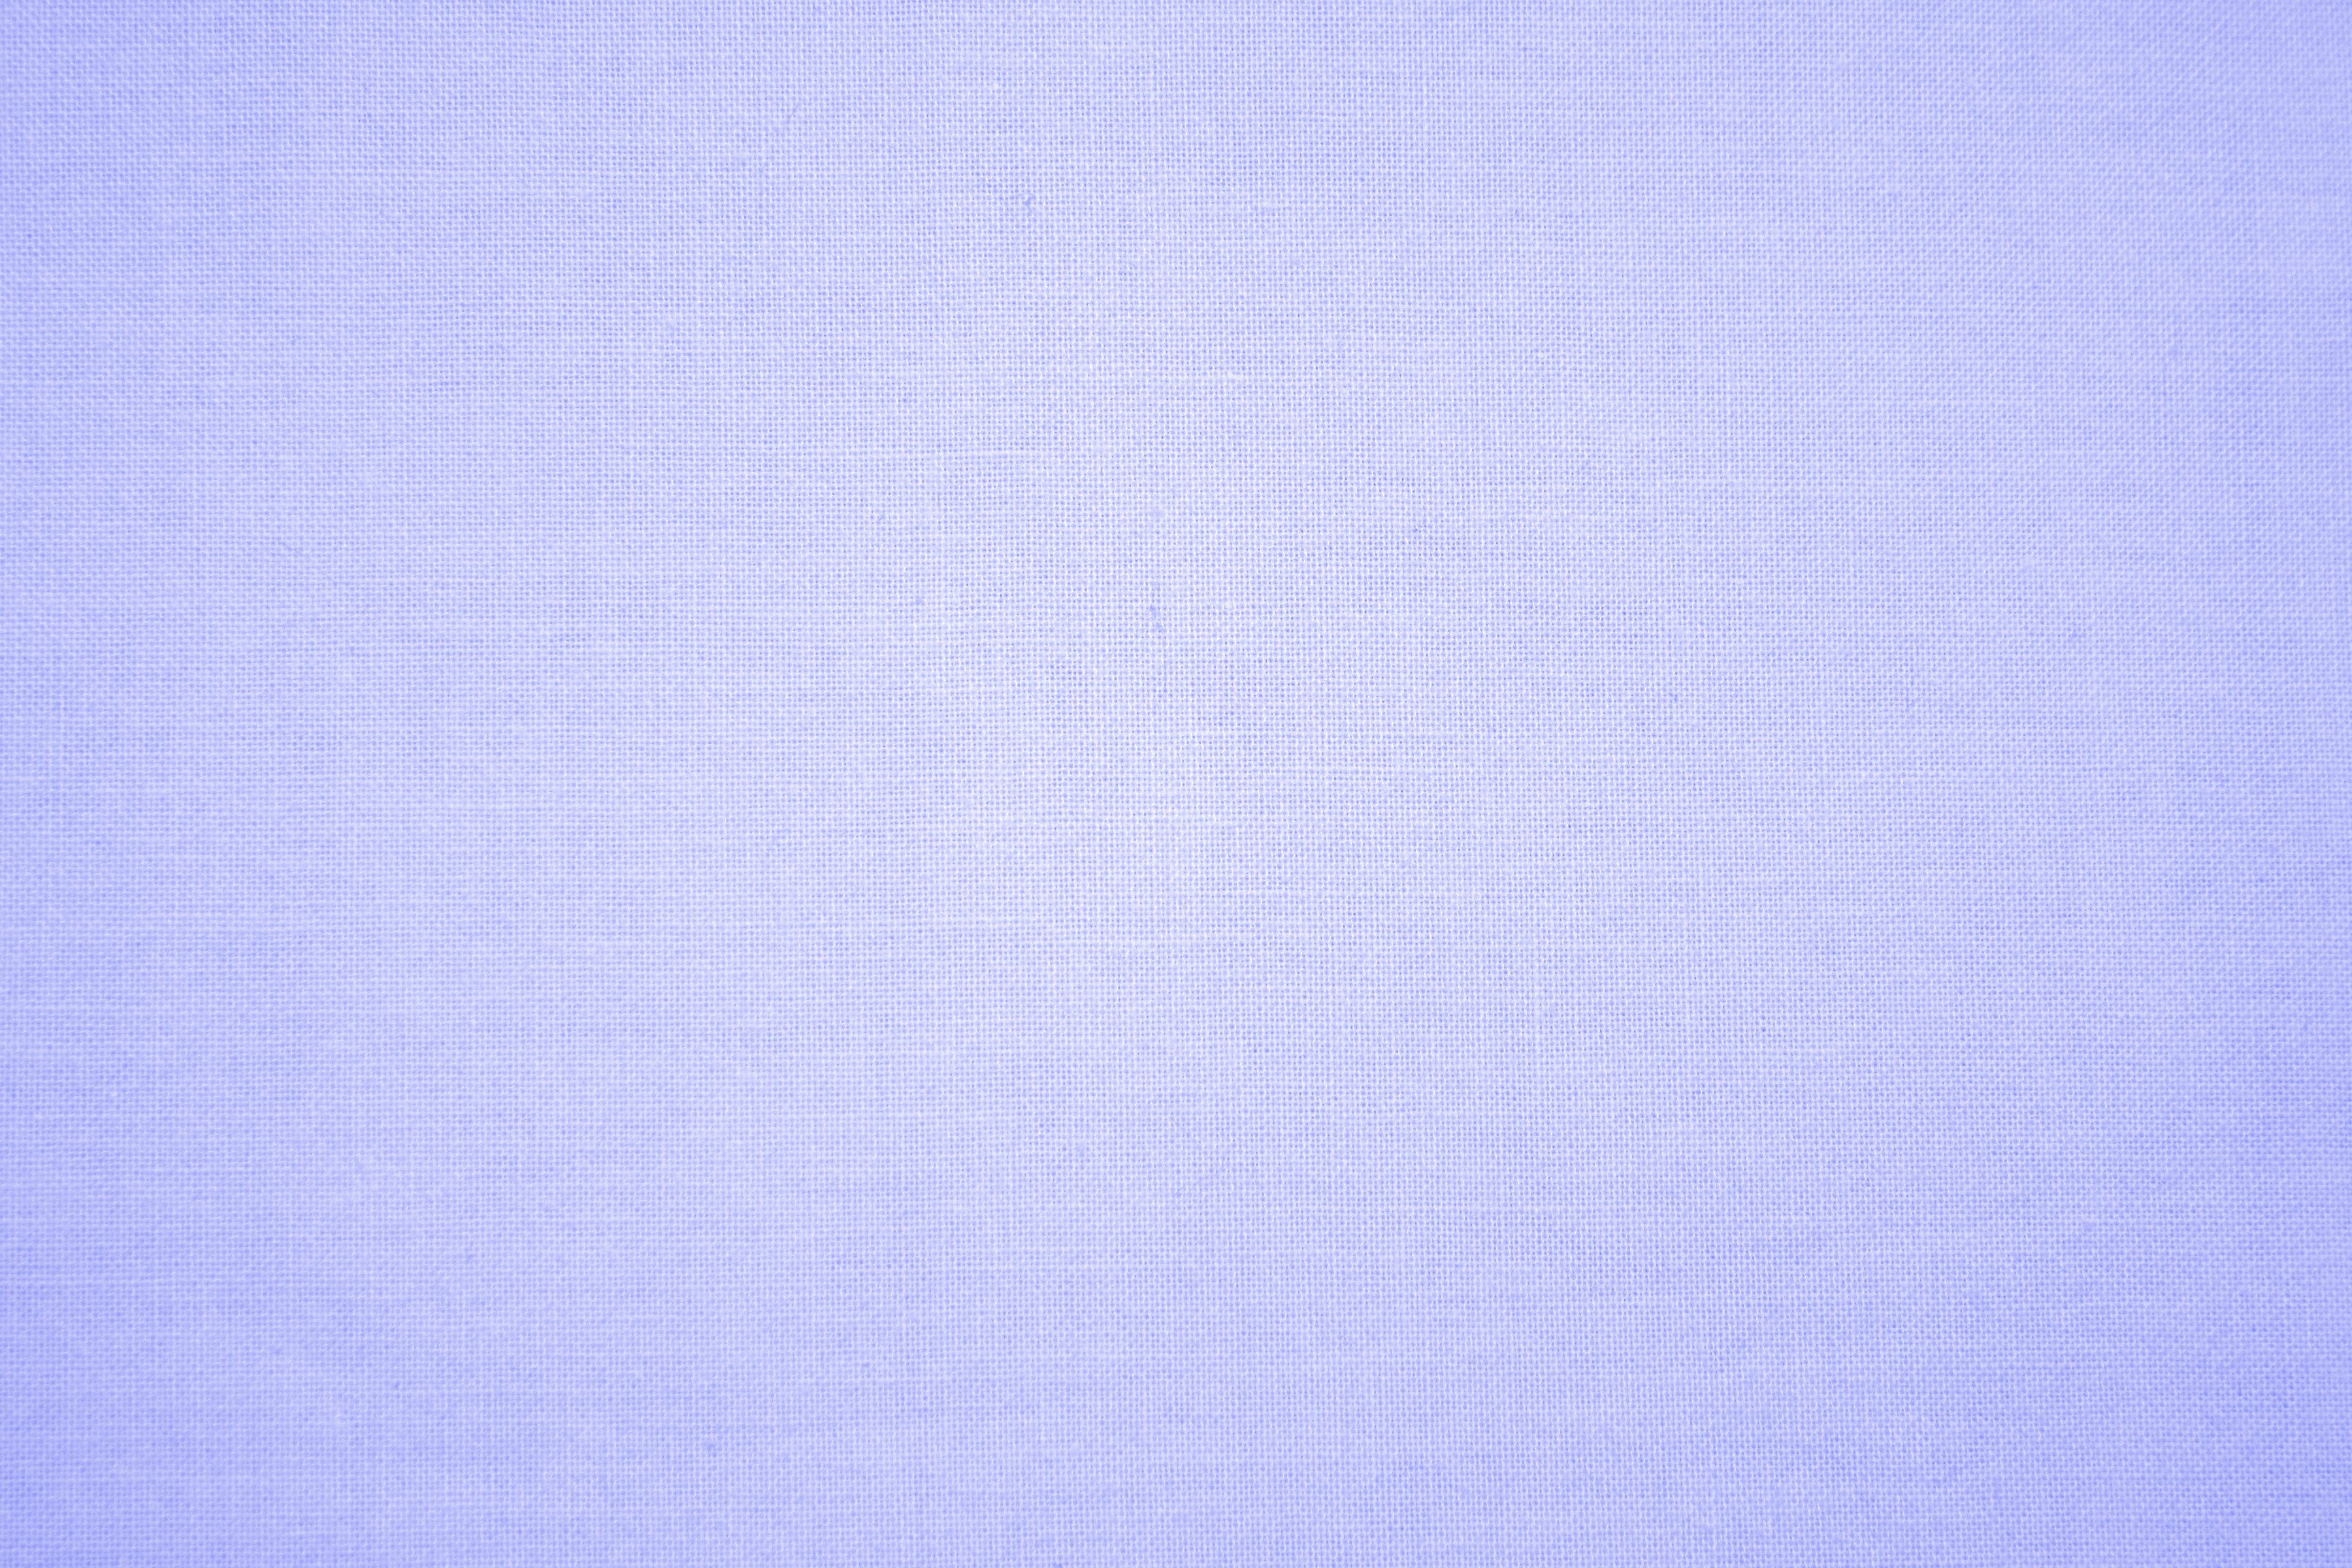 Indigo Blue Canvas Fabric Texture Picture, Free Photograph